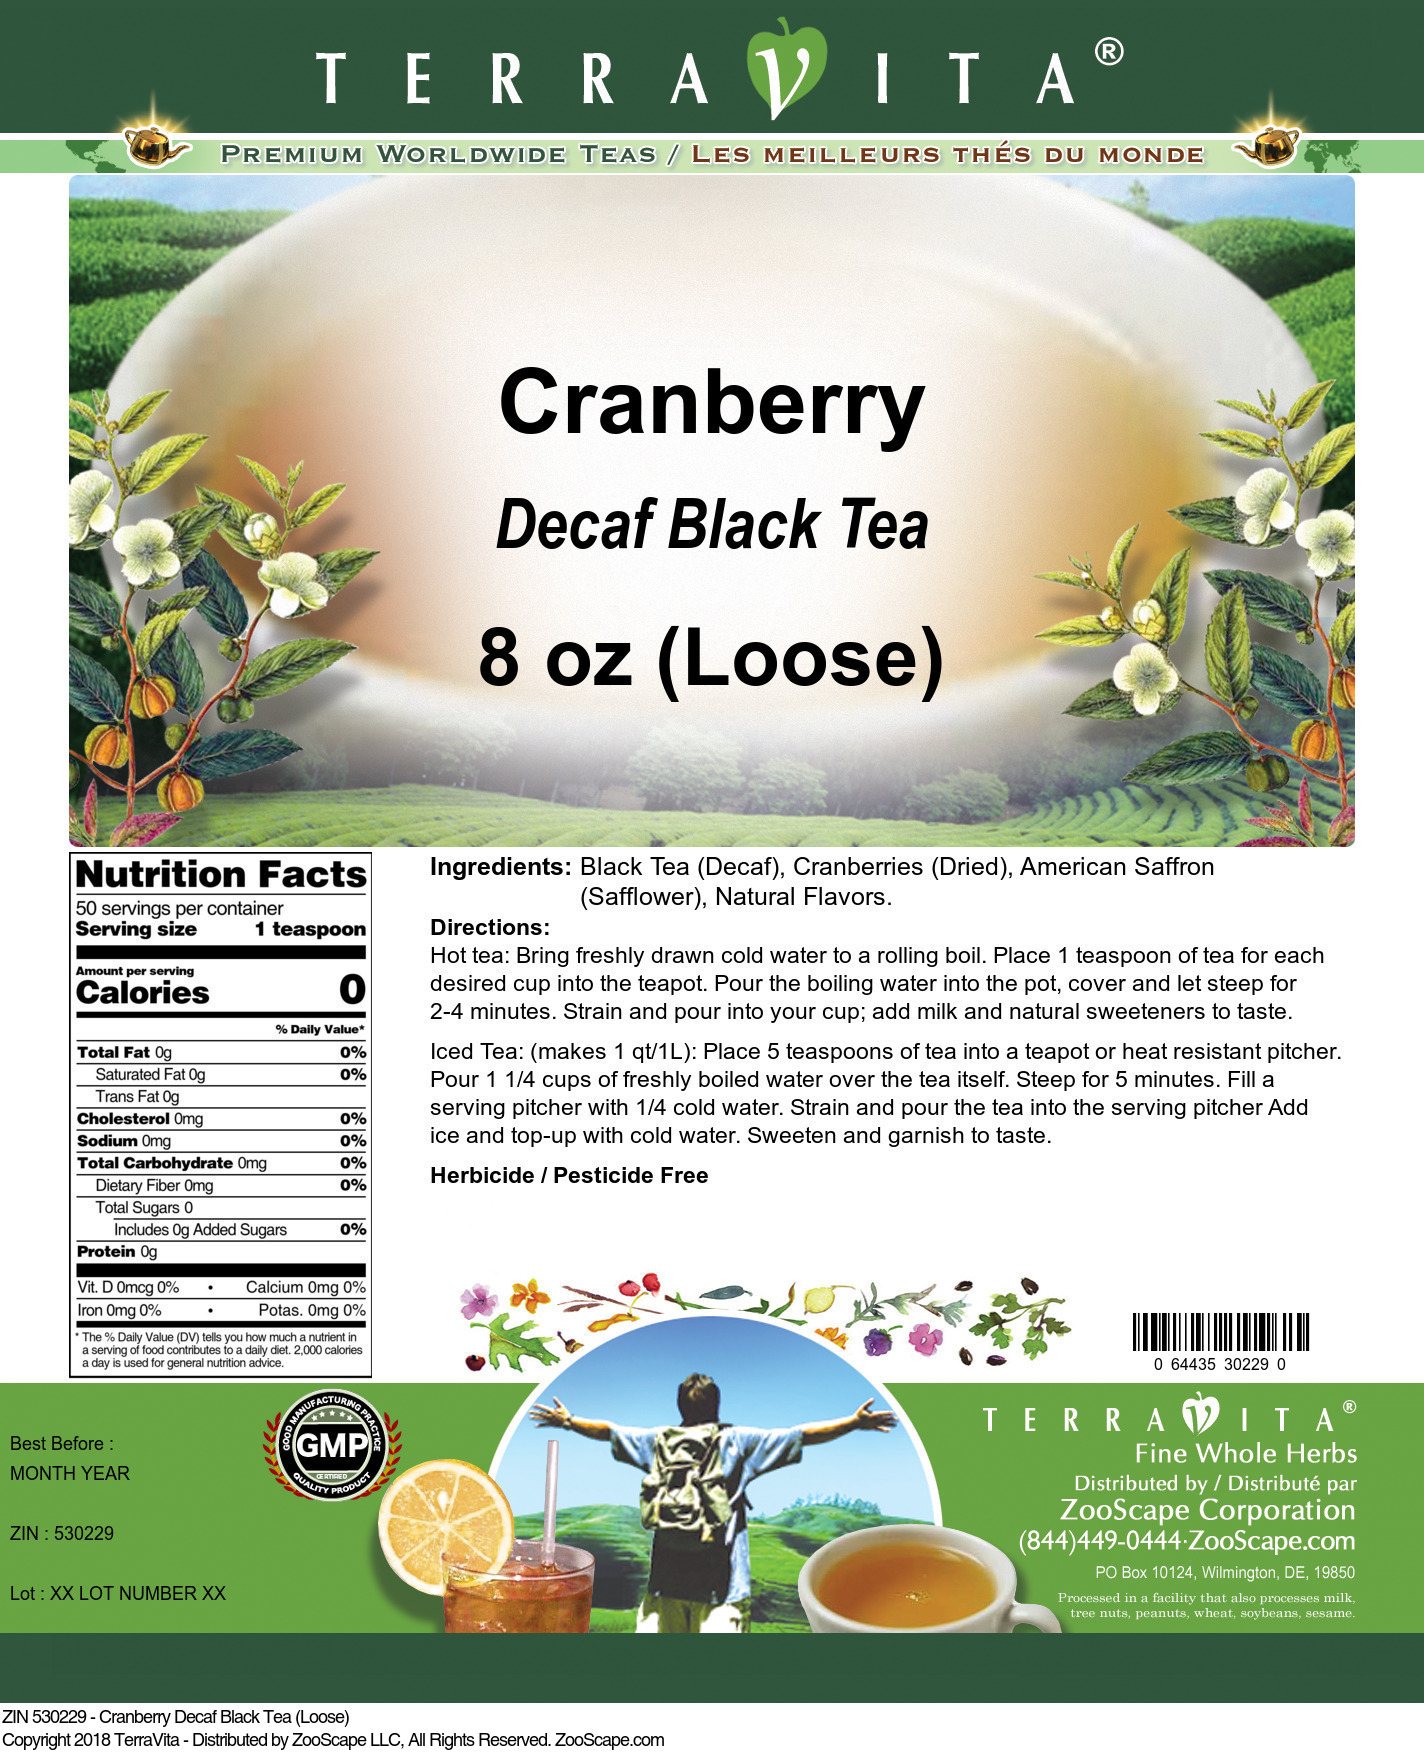 Cranberry Decaf Black Tea (Loose) - Label